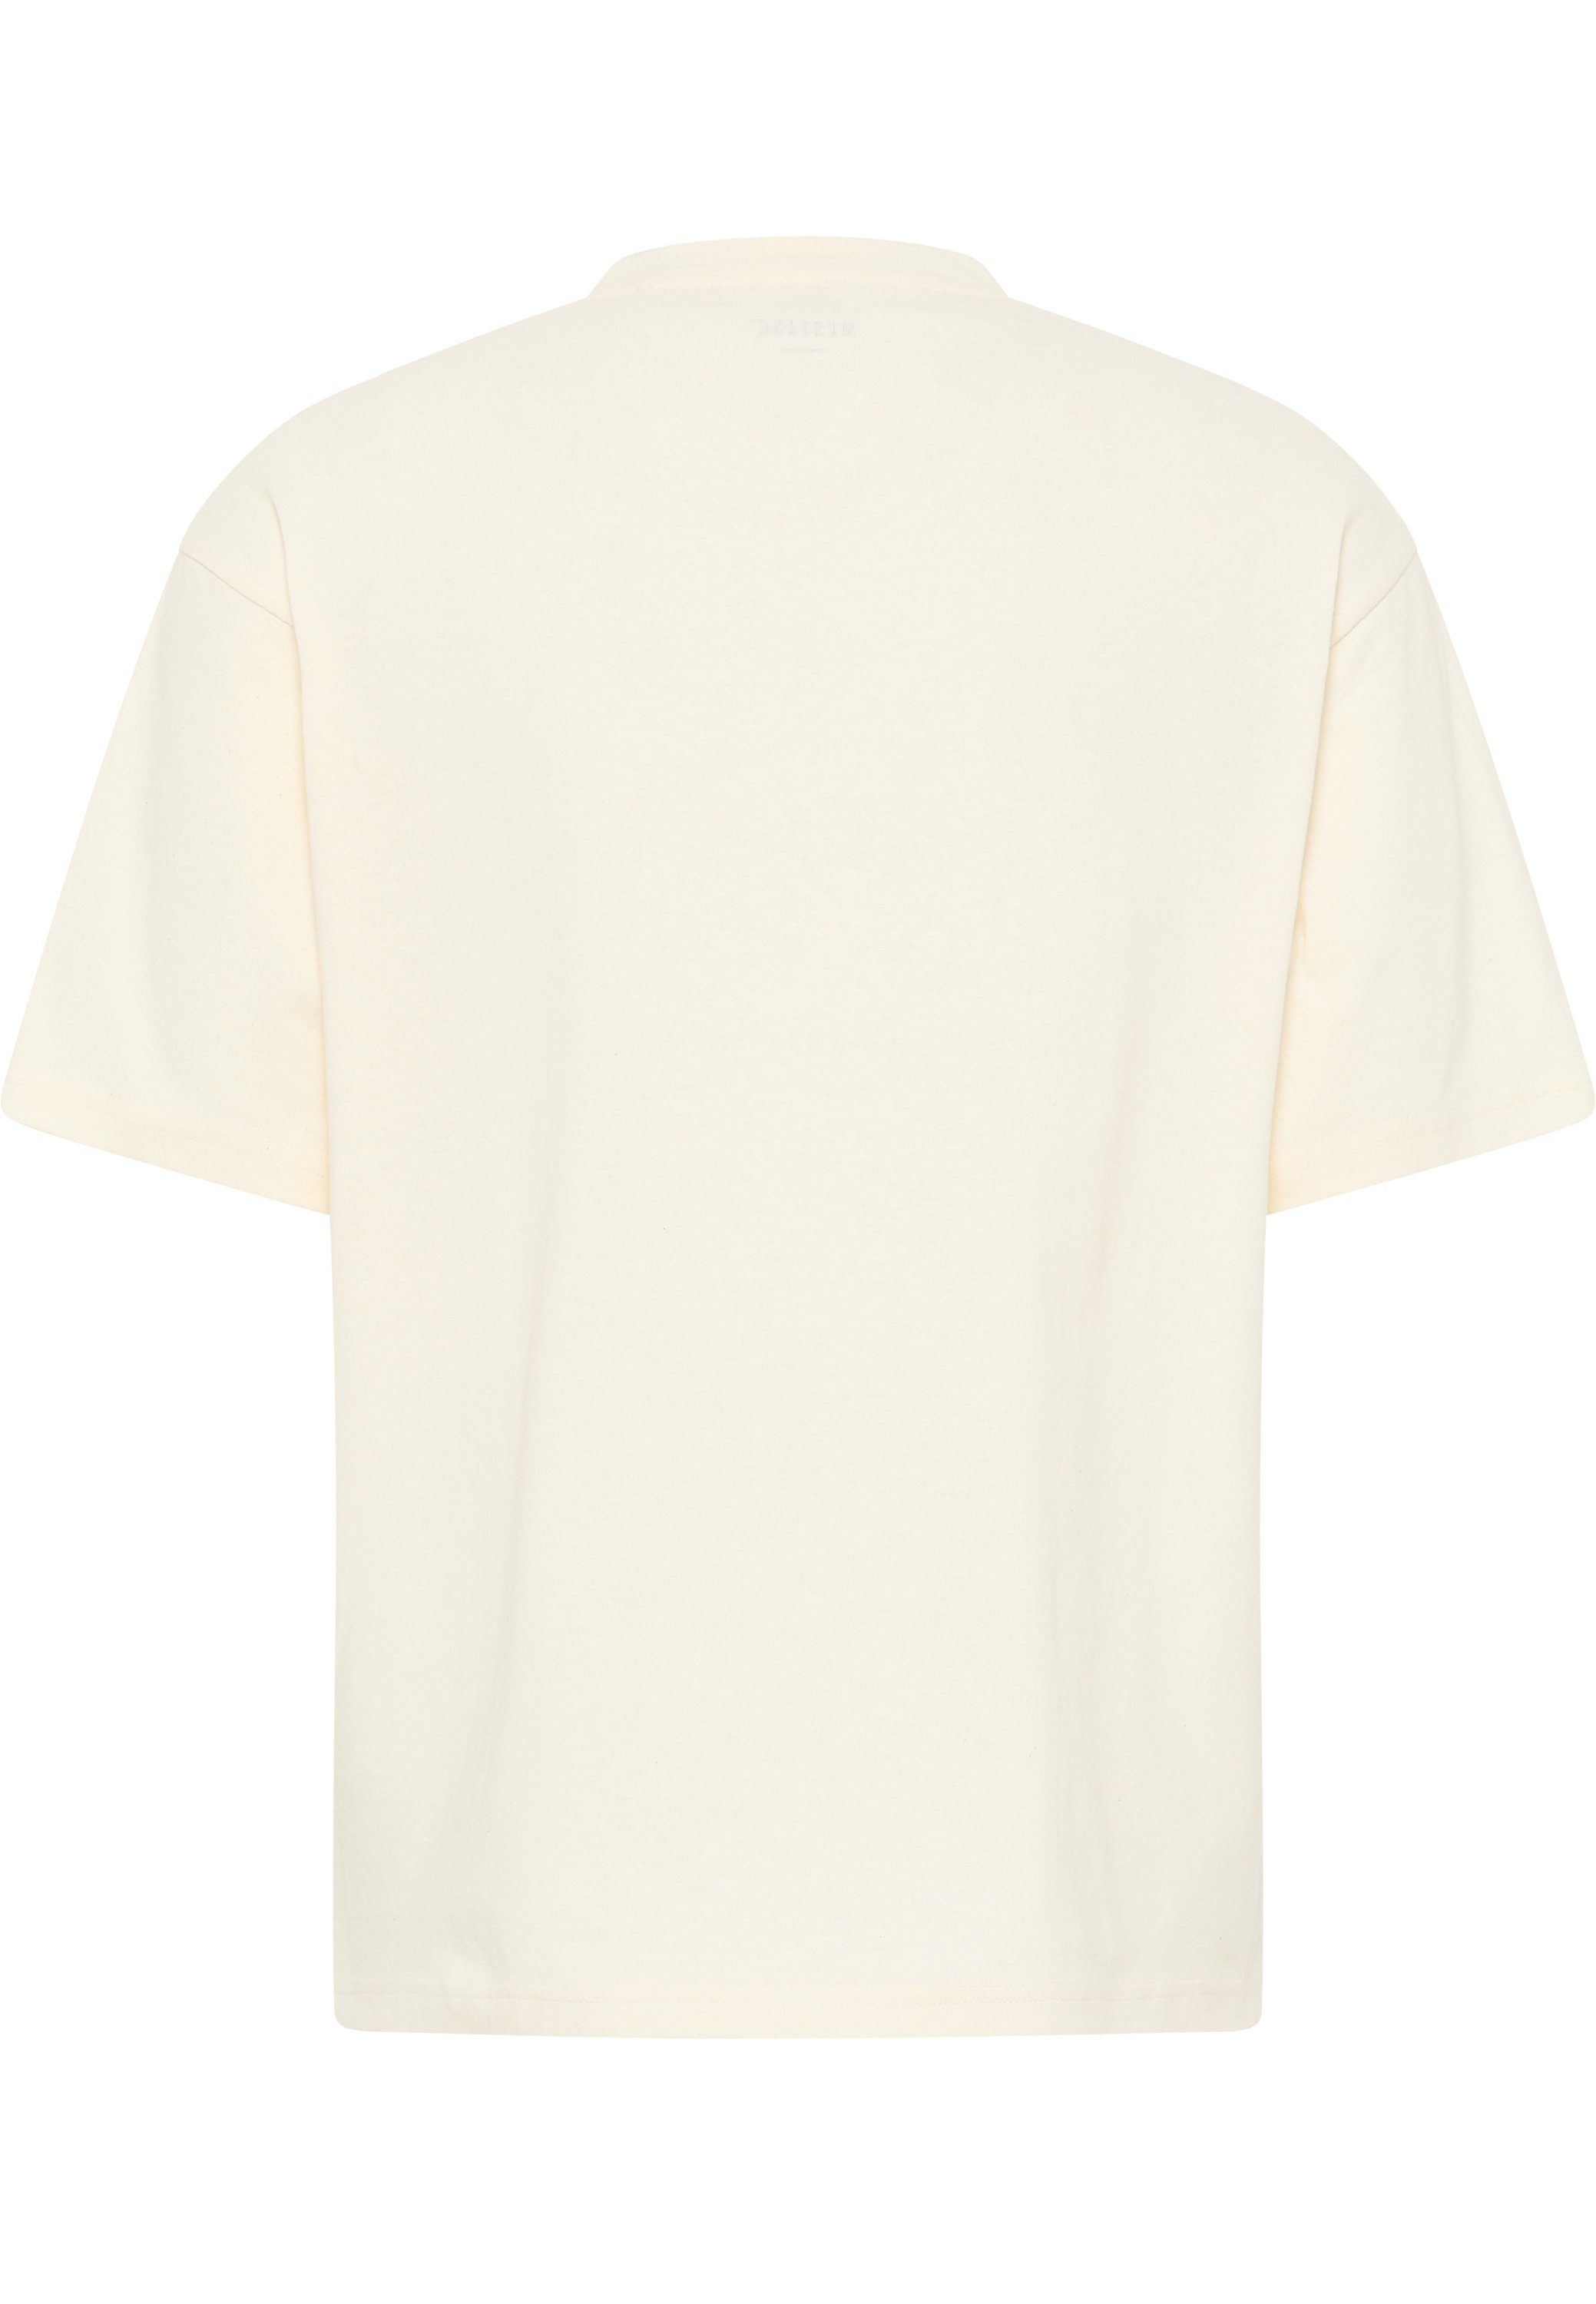 MUSTANG Kurzarmshirt T-Shirt, Brusthöhe auf Label-Applikation